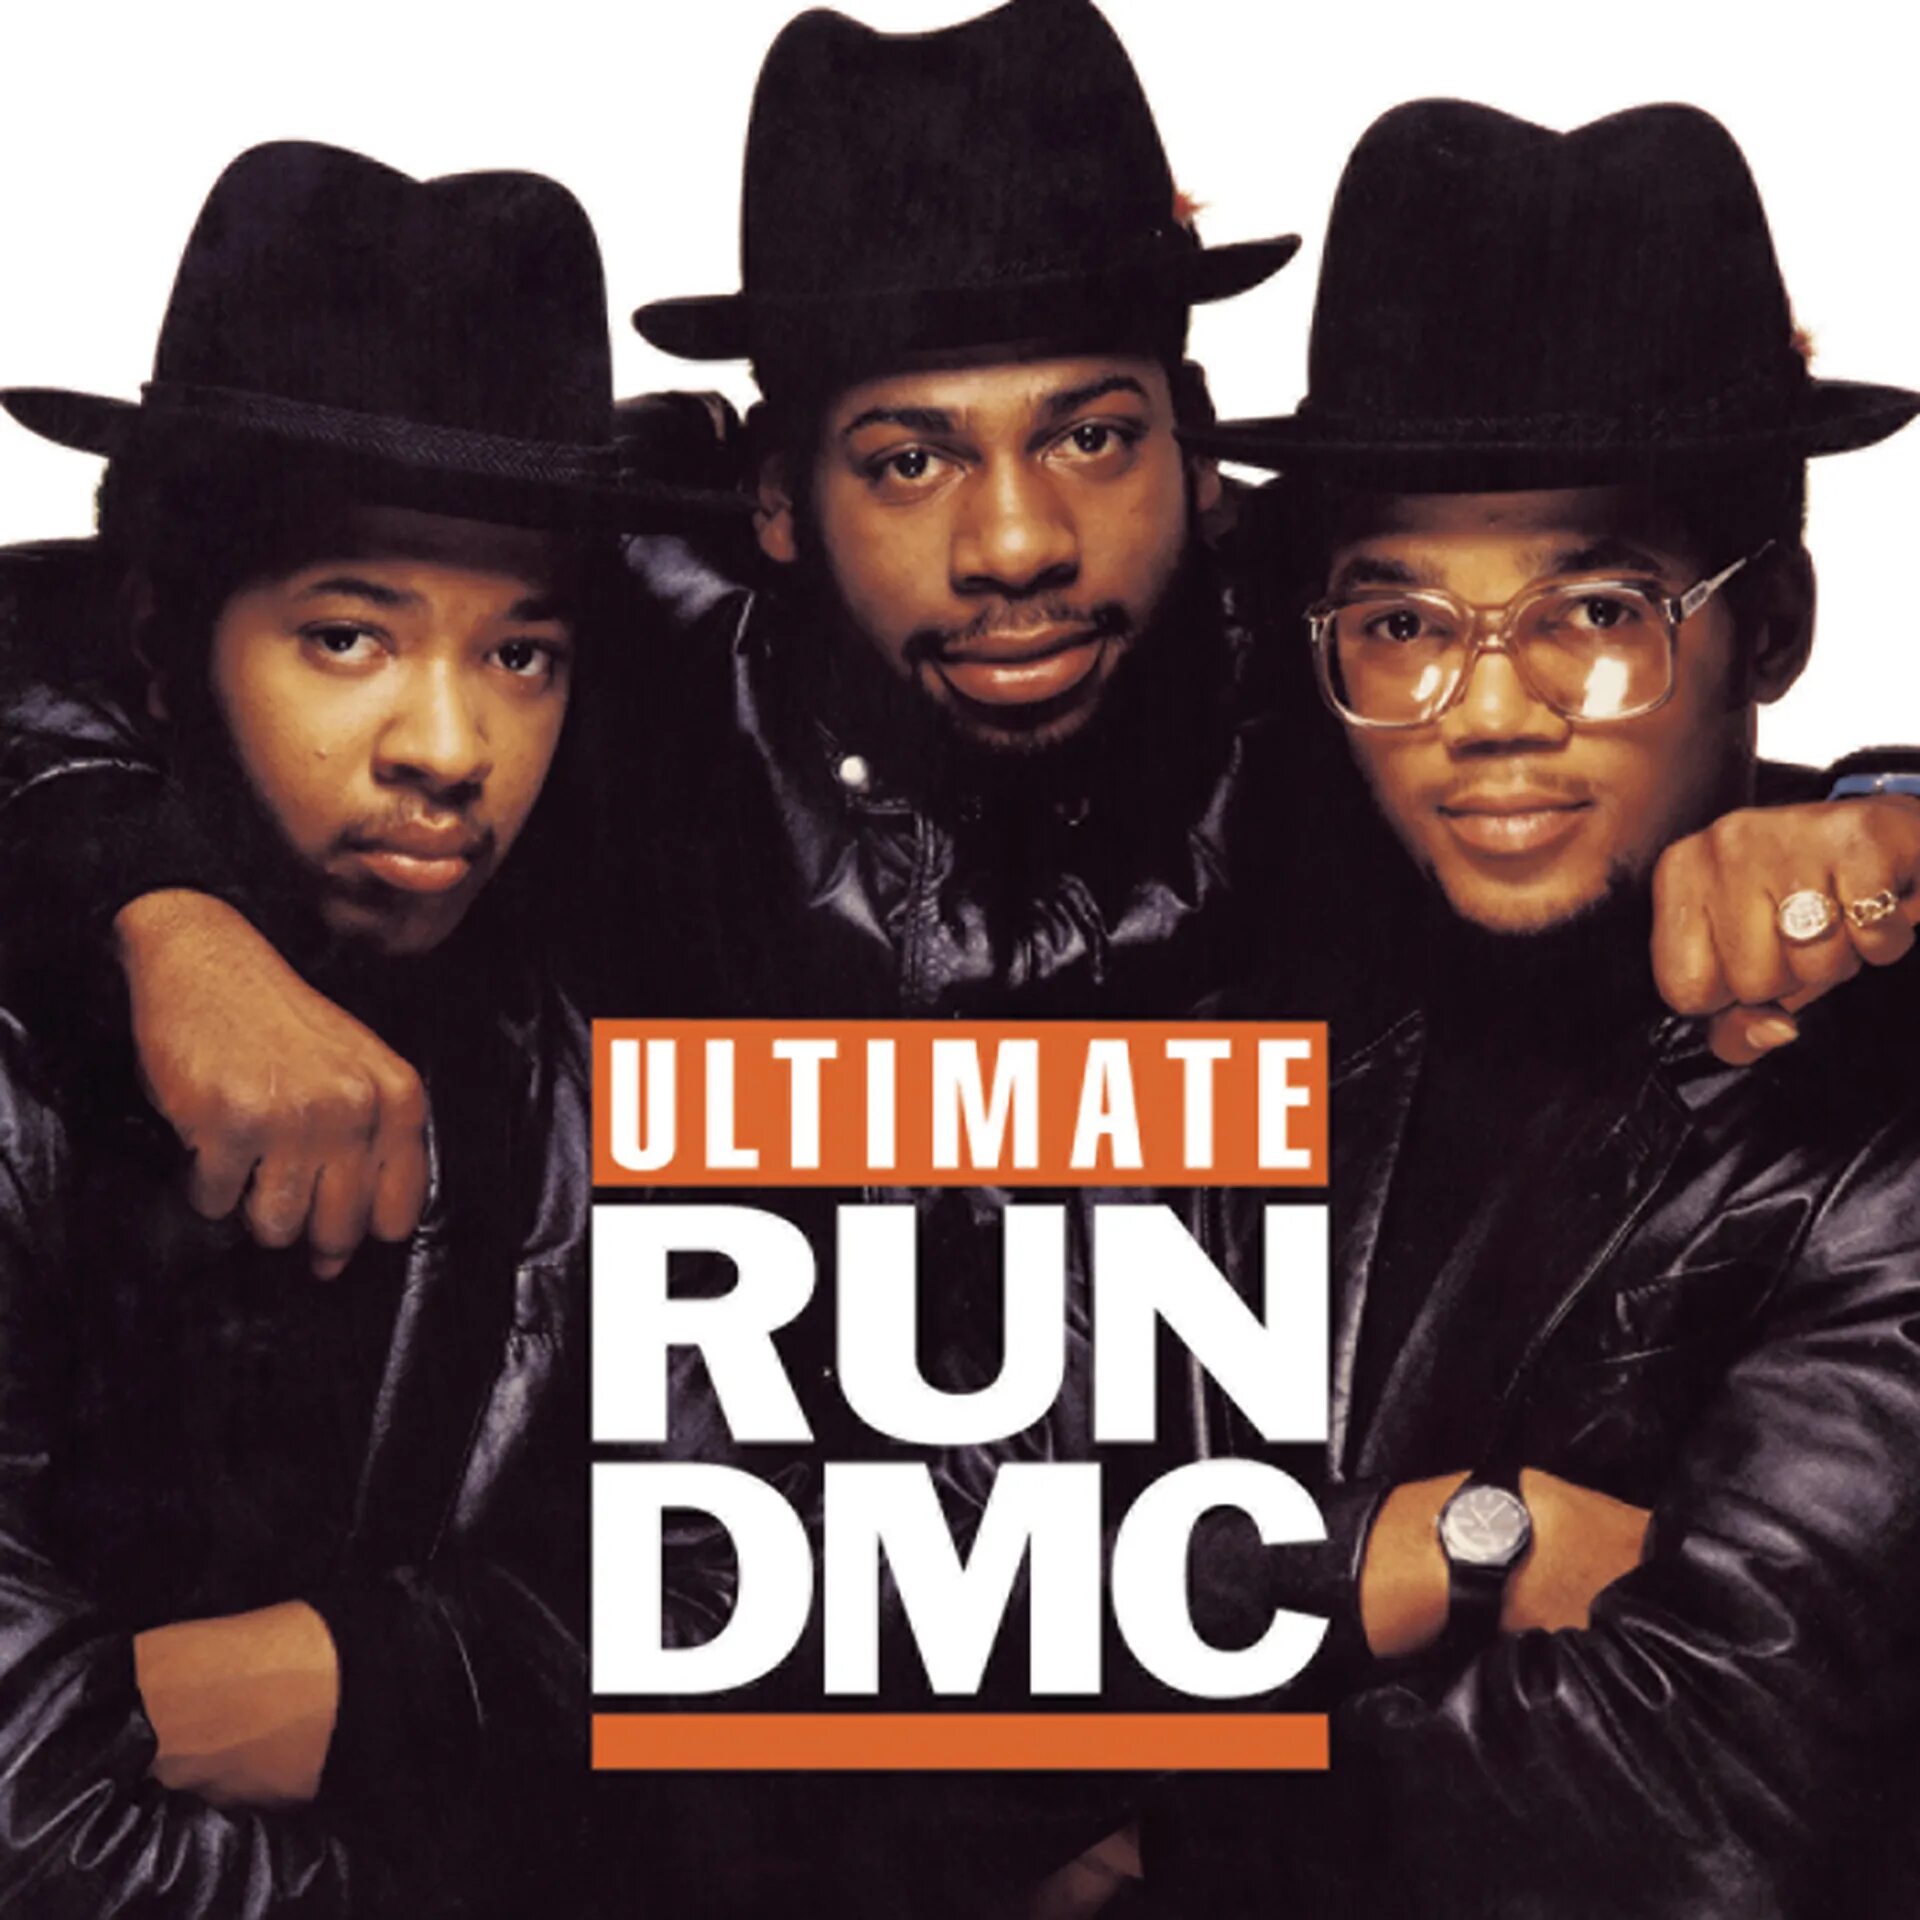 Run DMC 1984 album. Run DMC LP Cover. Run DMC CD диск. Run DMC Covers.